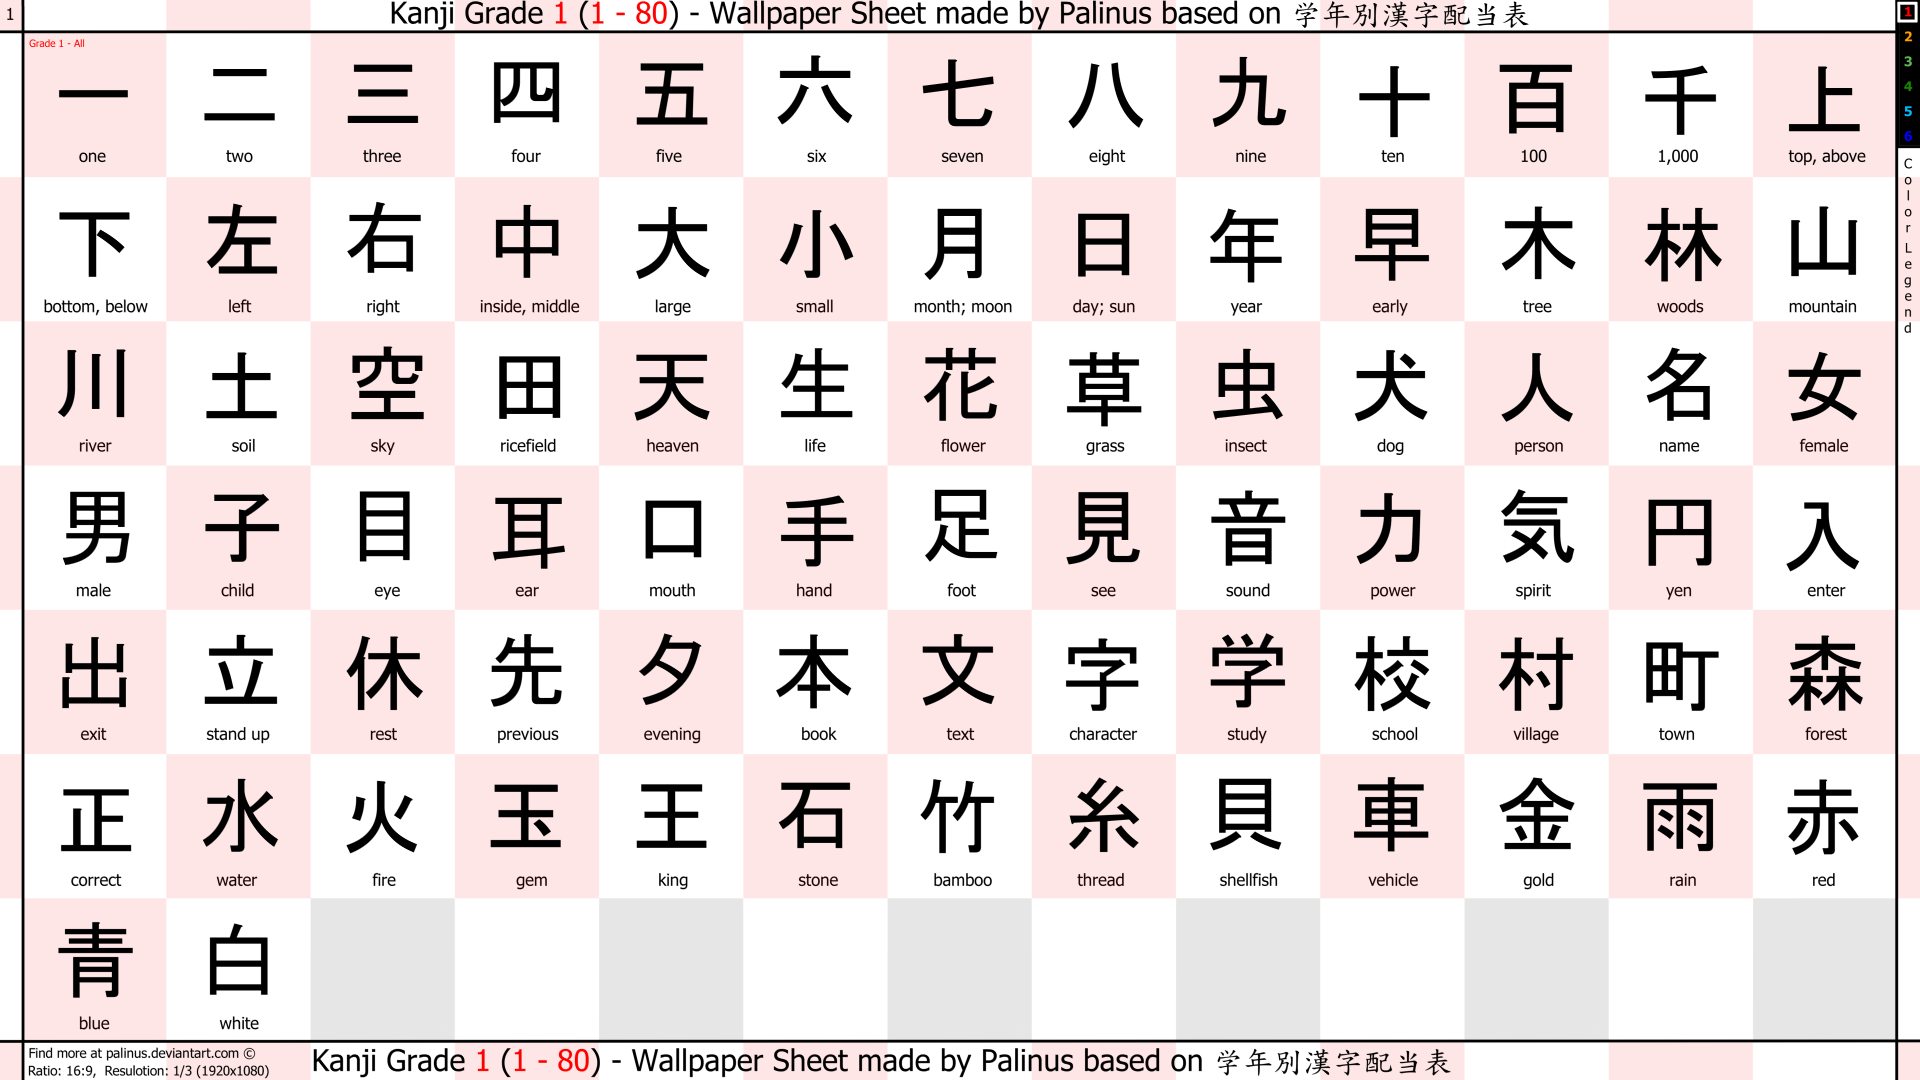 1 grade 80 kanji Grade by Wallpaper 1 Training on 1080p palinus Kanji